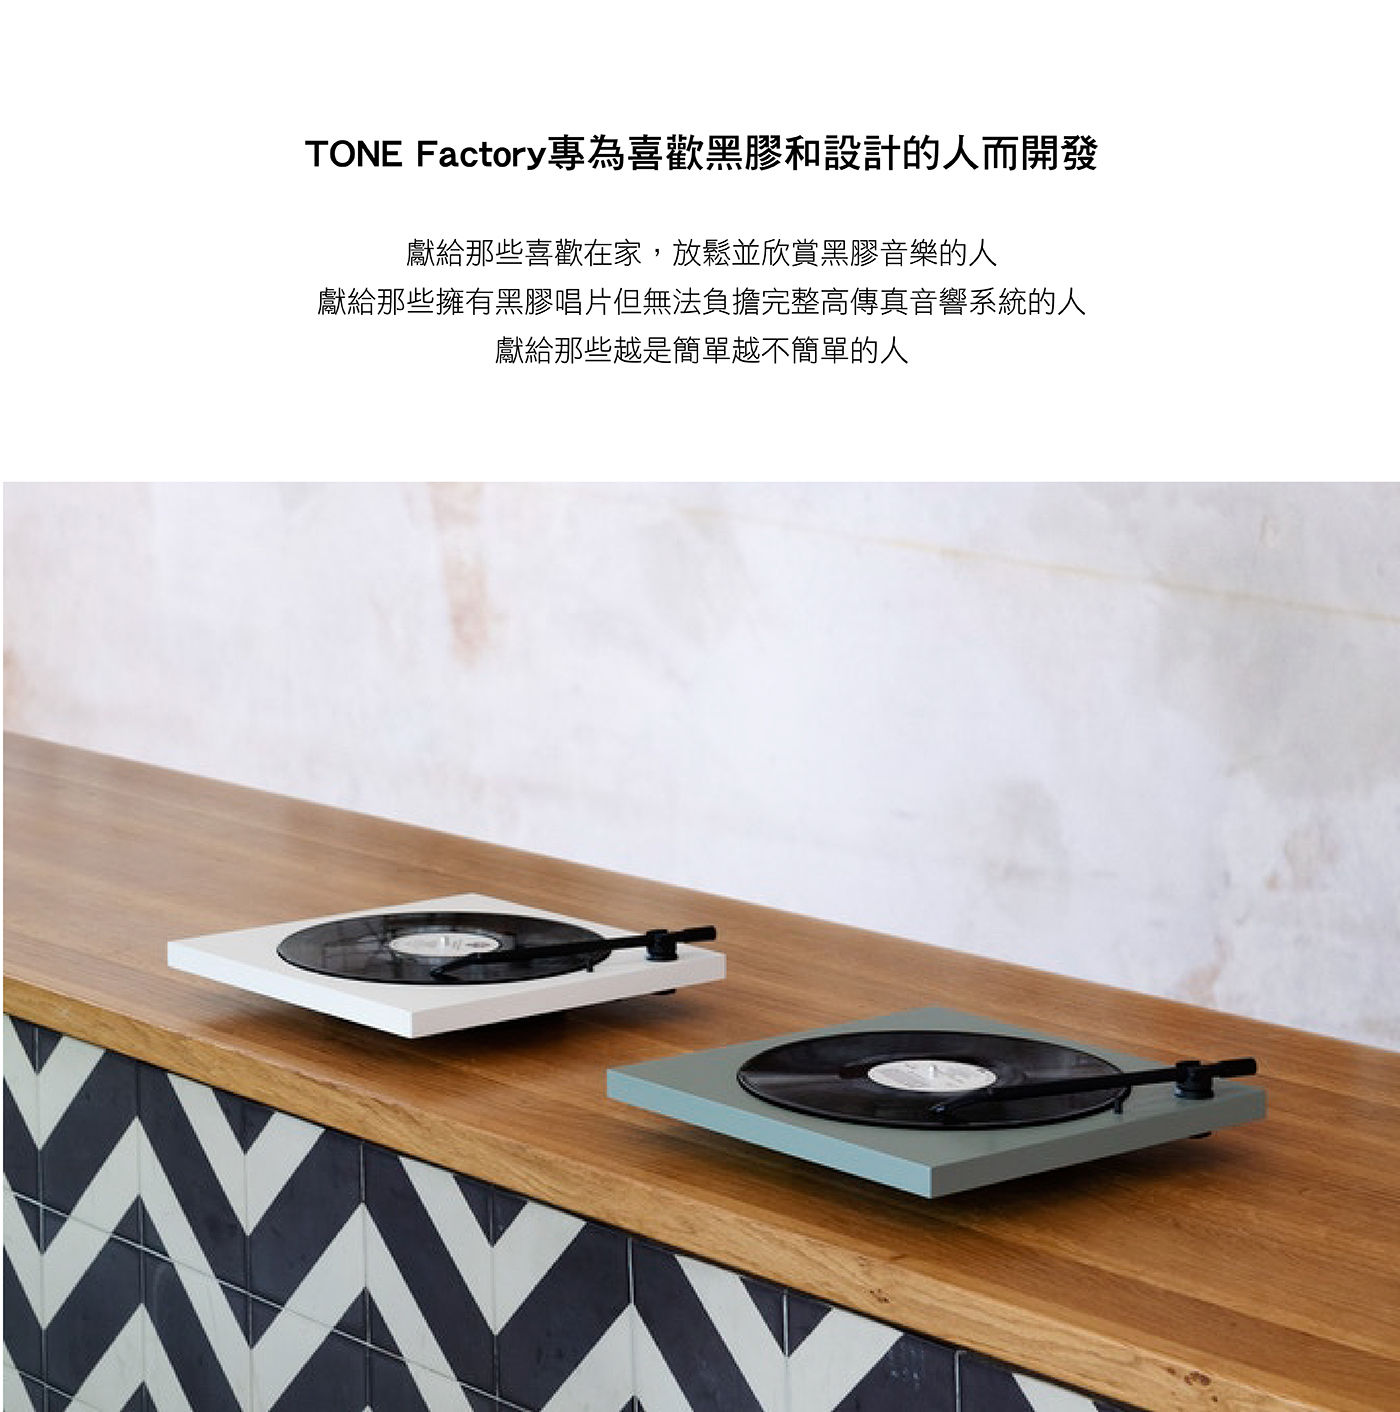 TONE Factory 藍牙黑膠唱盤 含防塵蓋專為喜歡黑膠和設計的人而開發